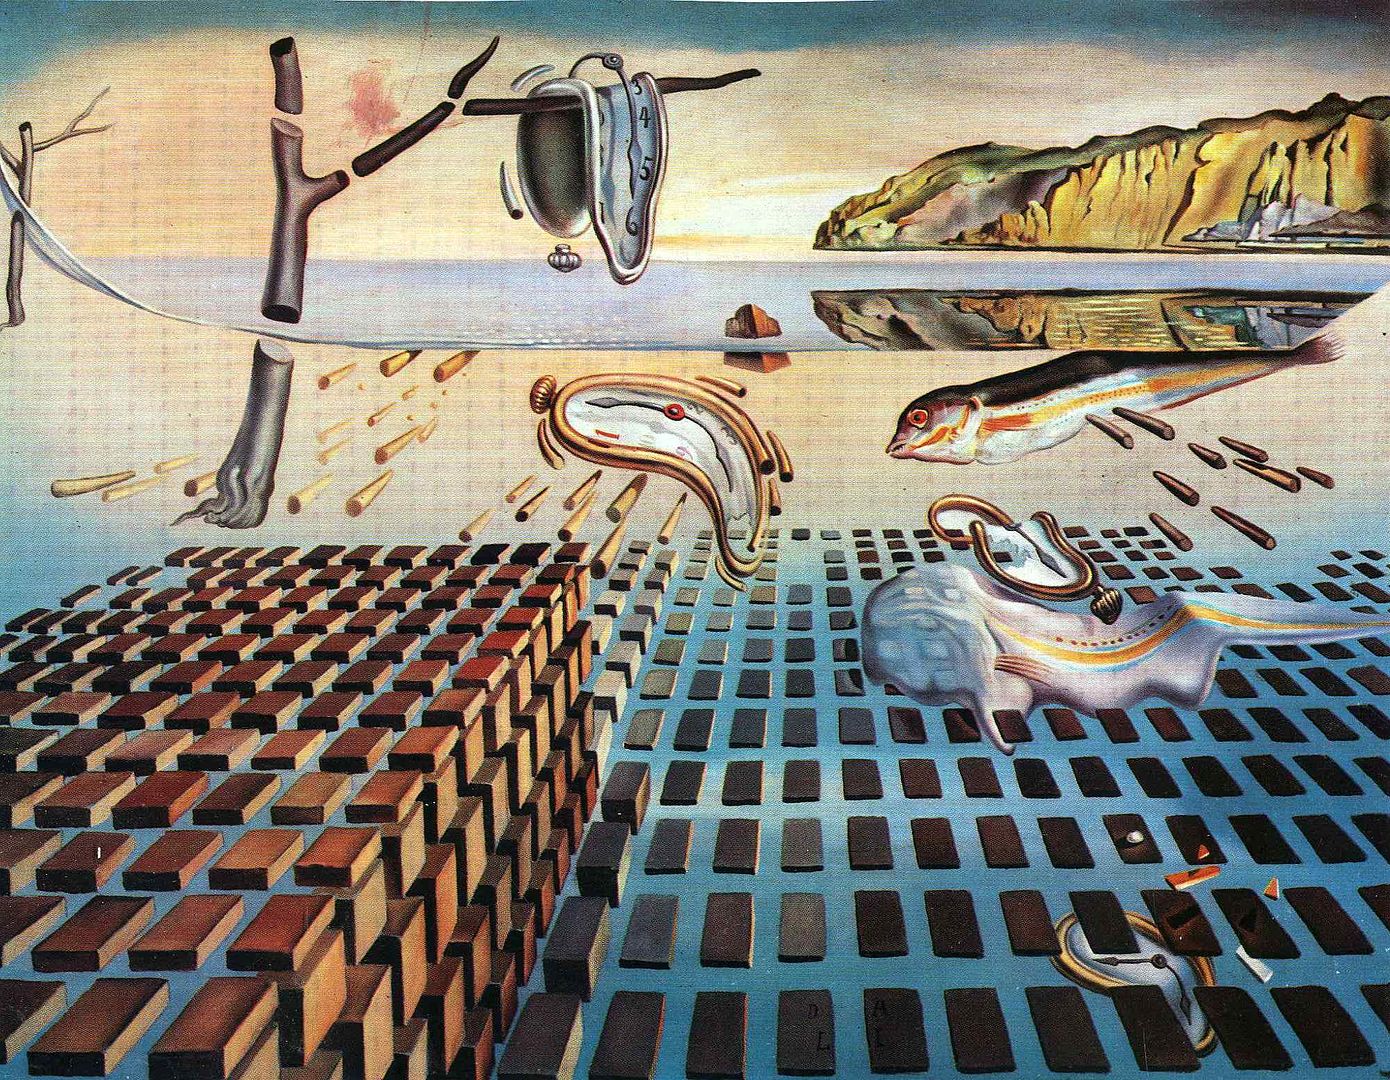 Salvador Dali disintegration memory CANVAS ART PRINT Poster 16"X 12" - Afbeelding 1 van 1